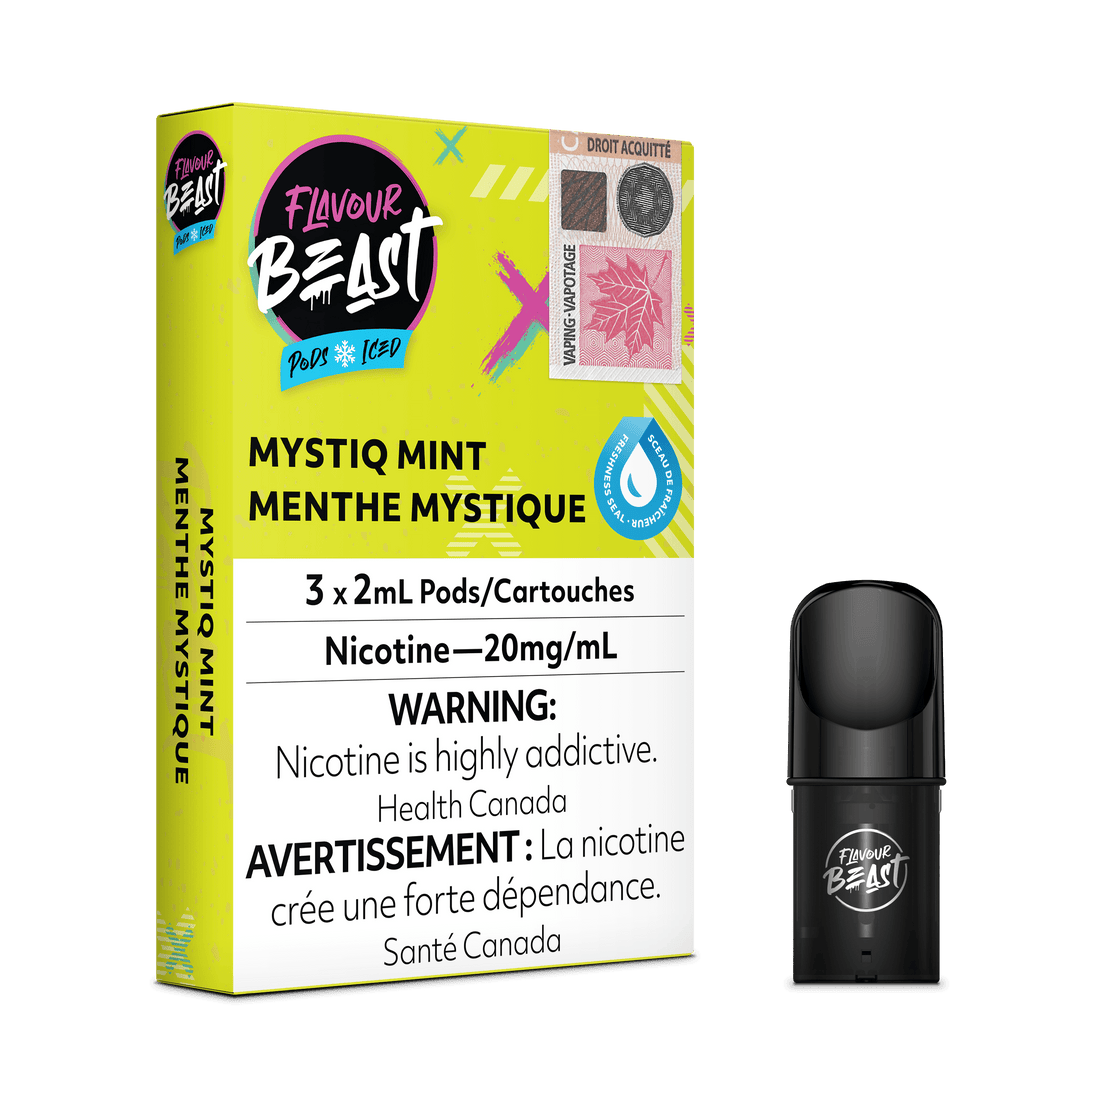 Flavour Beast Pods - Mystiq Mint Iced - Vapor Shoppe